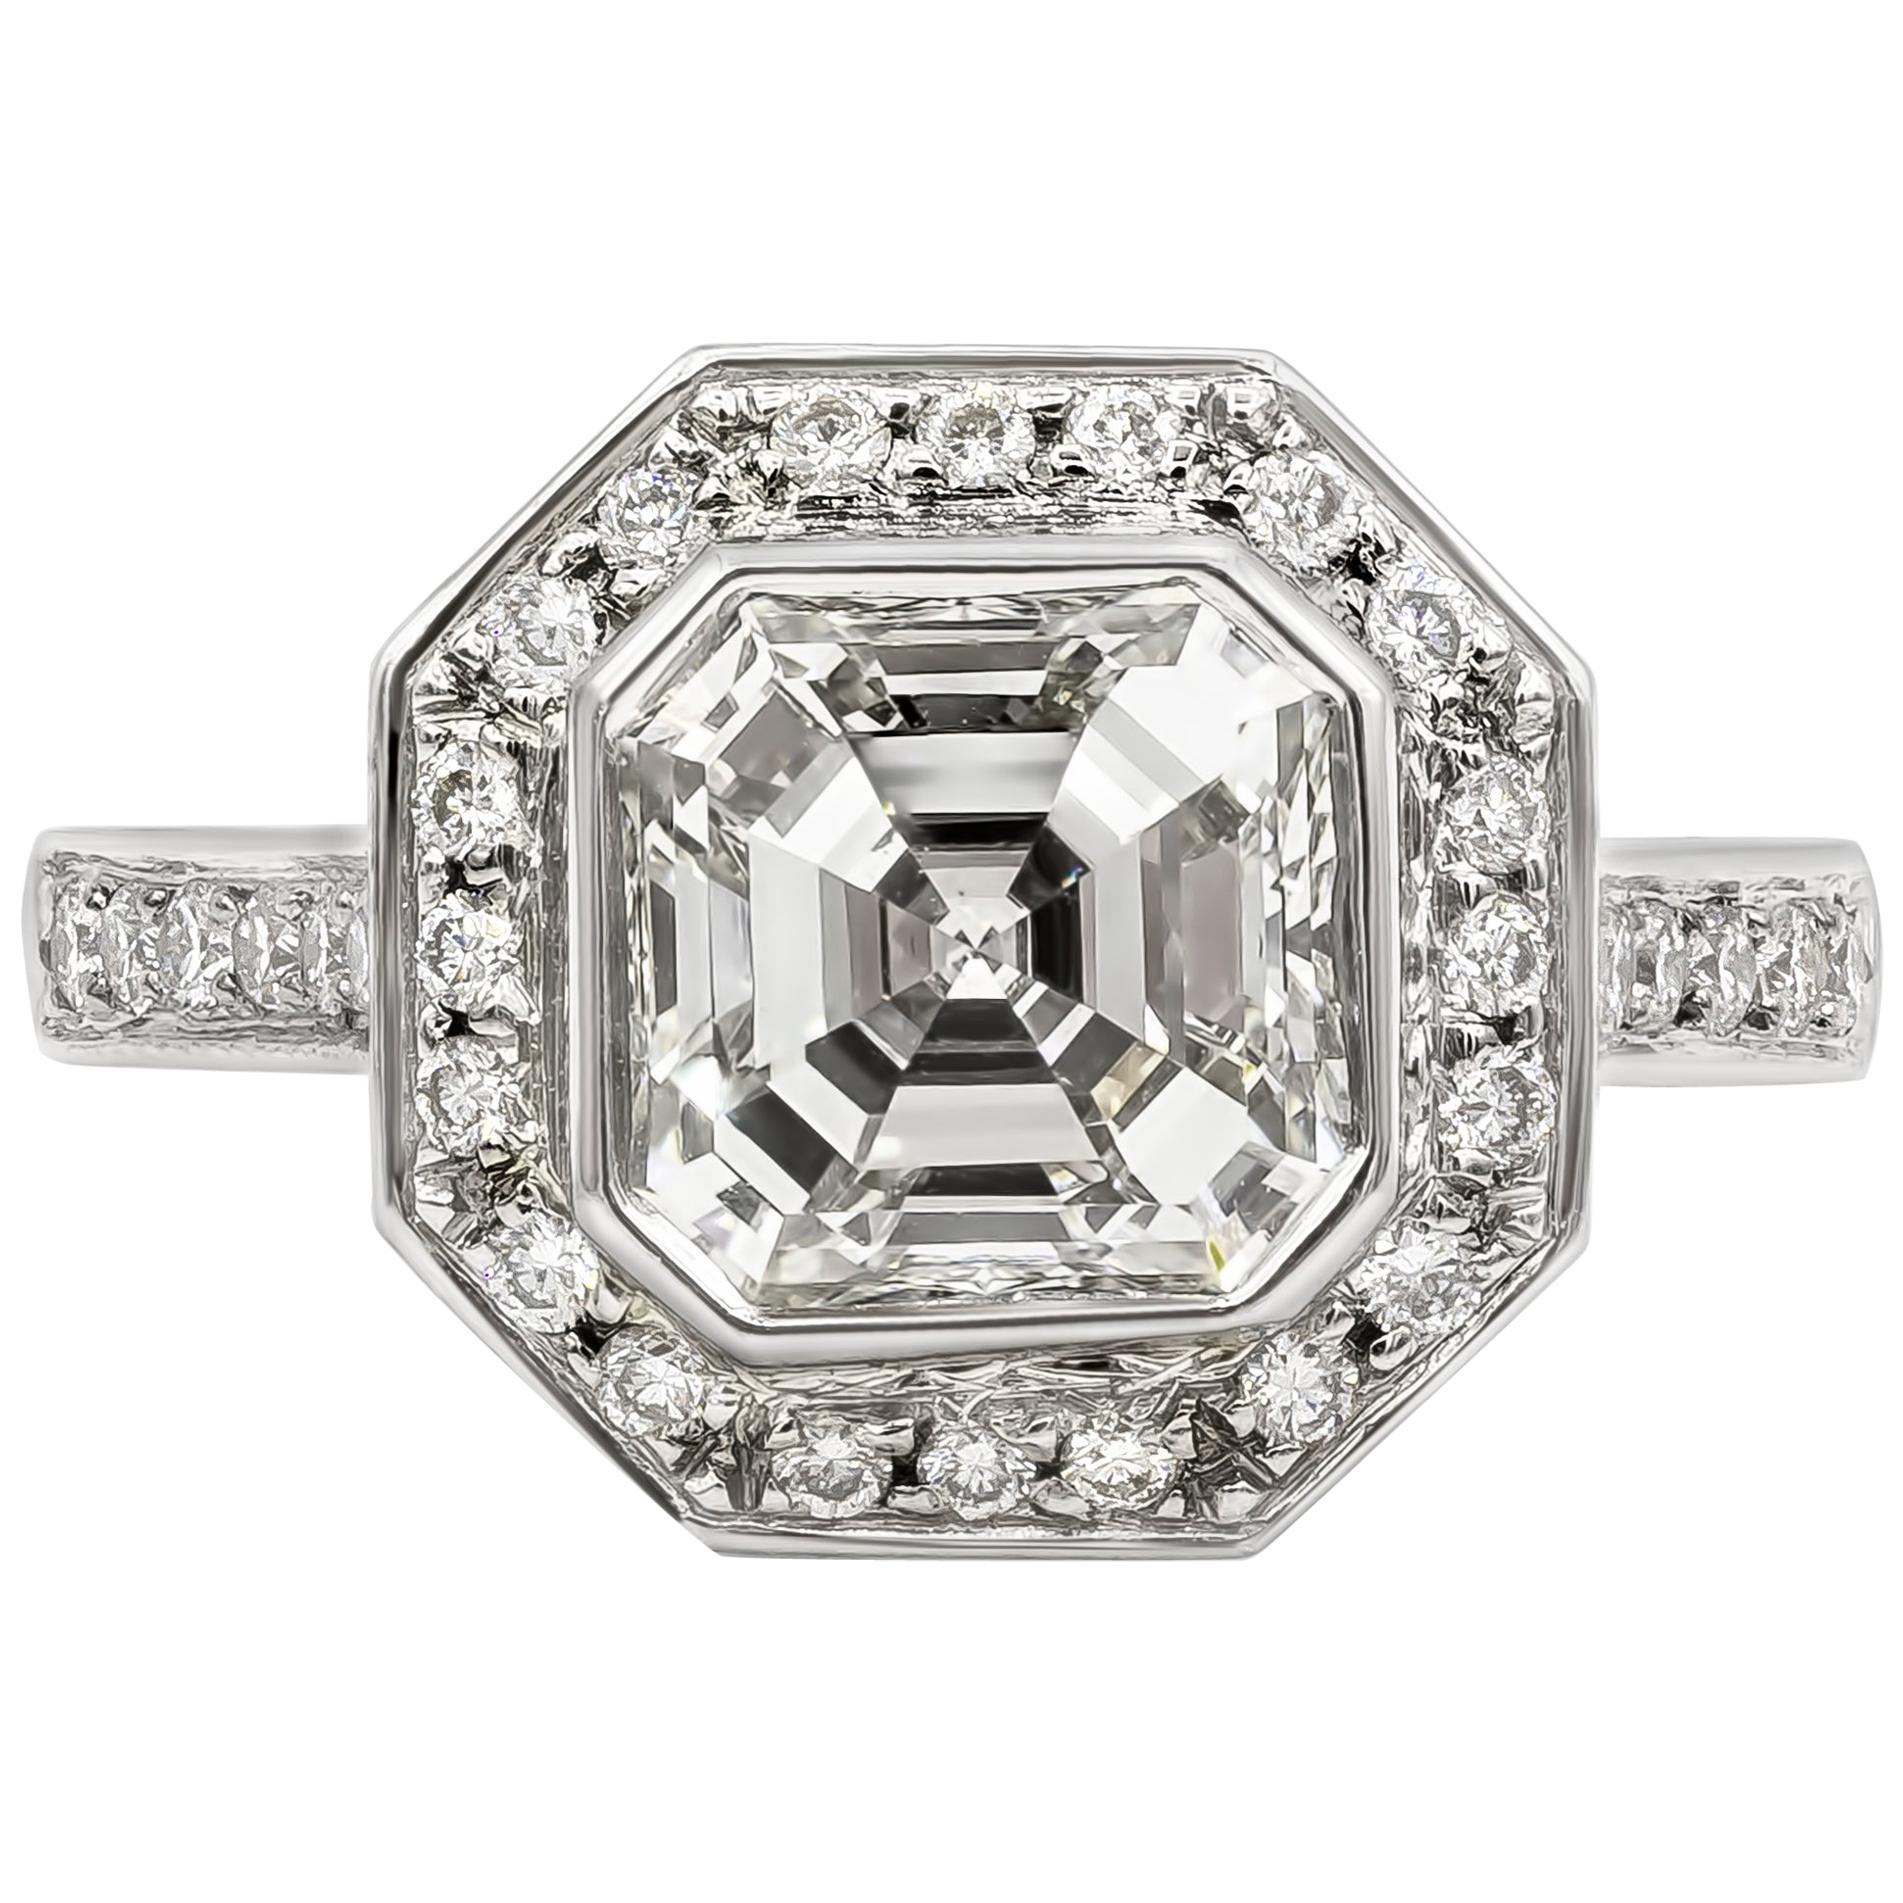 Roman Malakov 2.07 Carats Asscher Cut Diamond Halo Engagement Ring